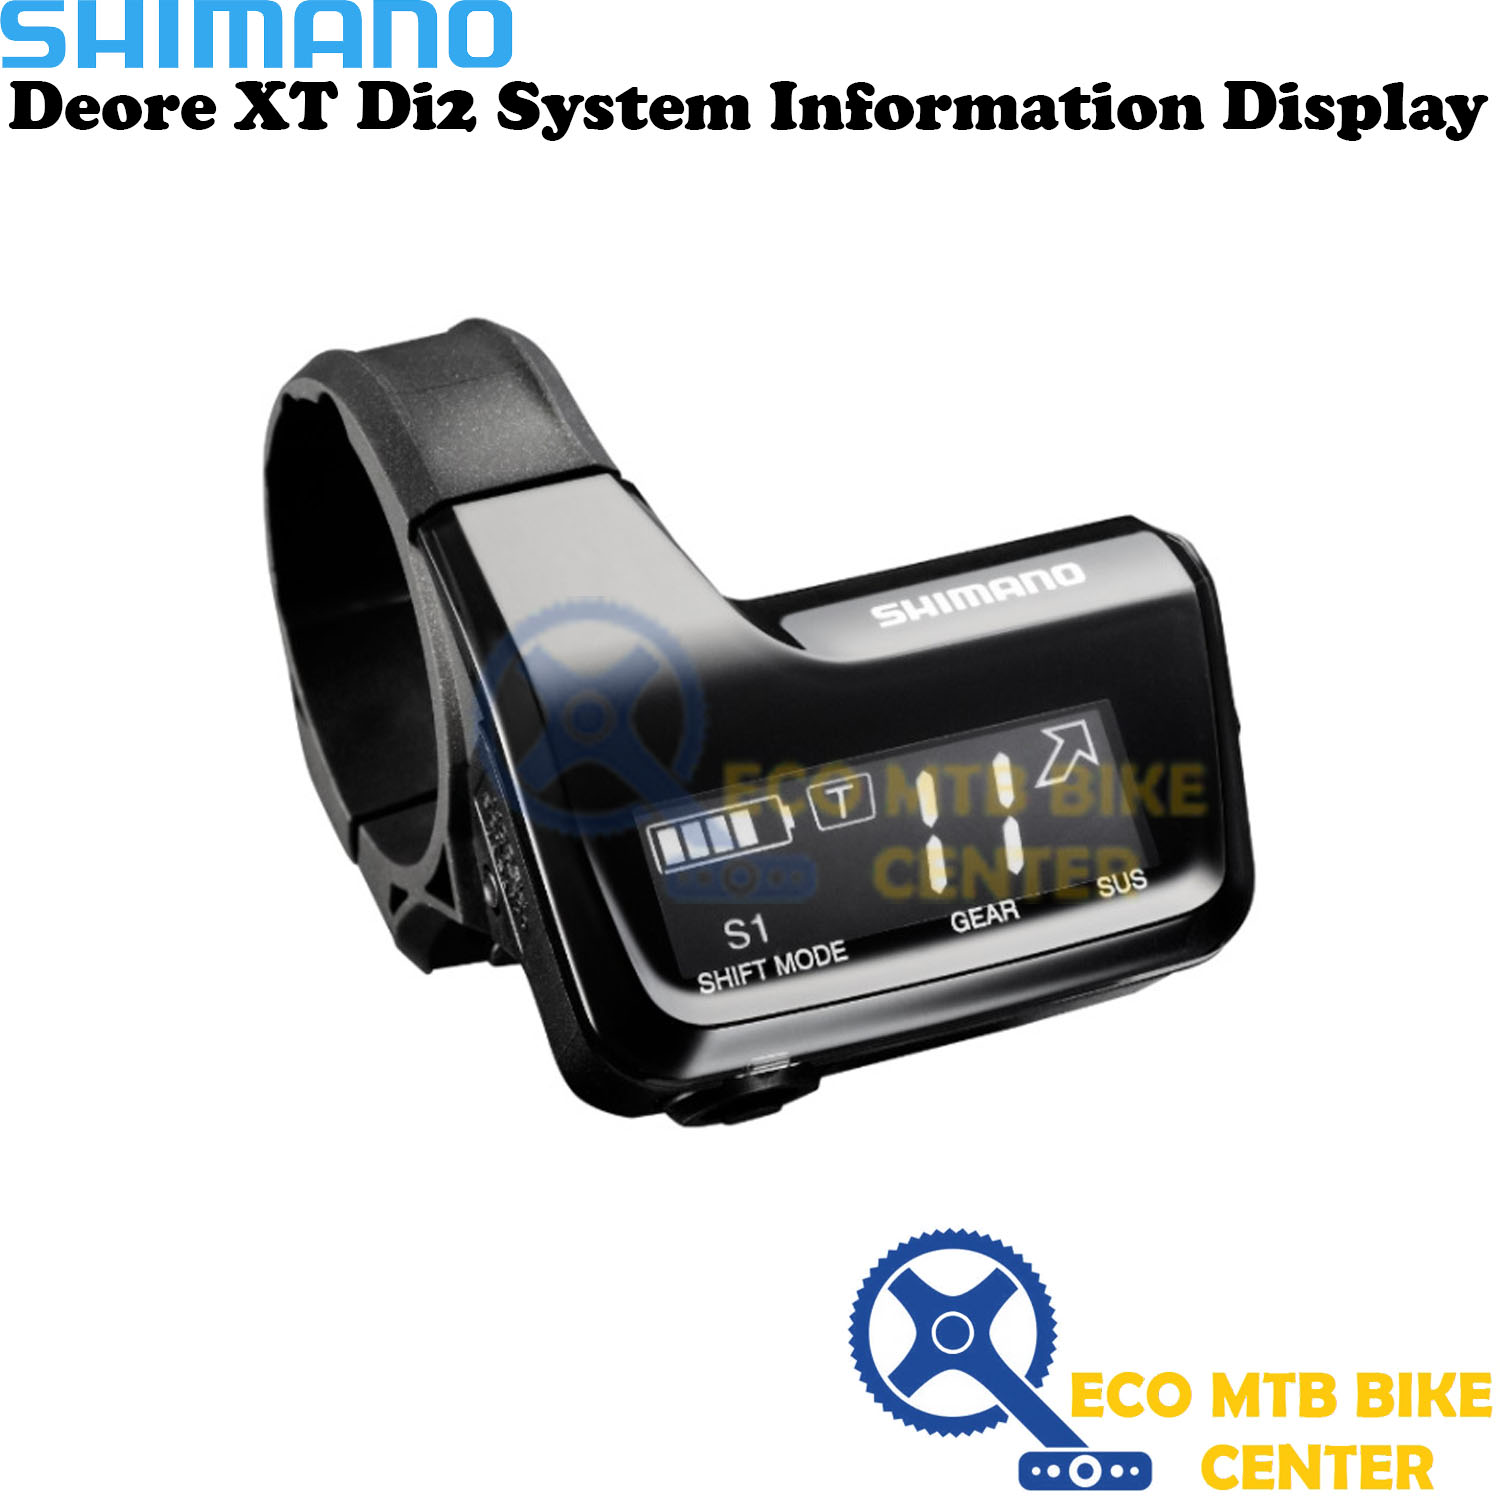 SHIMANO Deore XT Di2 System Information Display